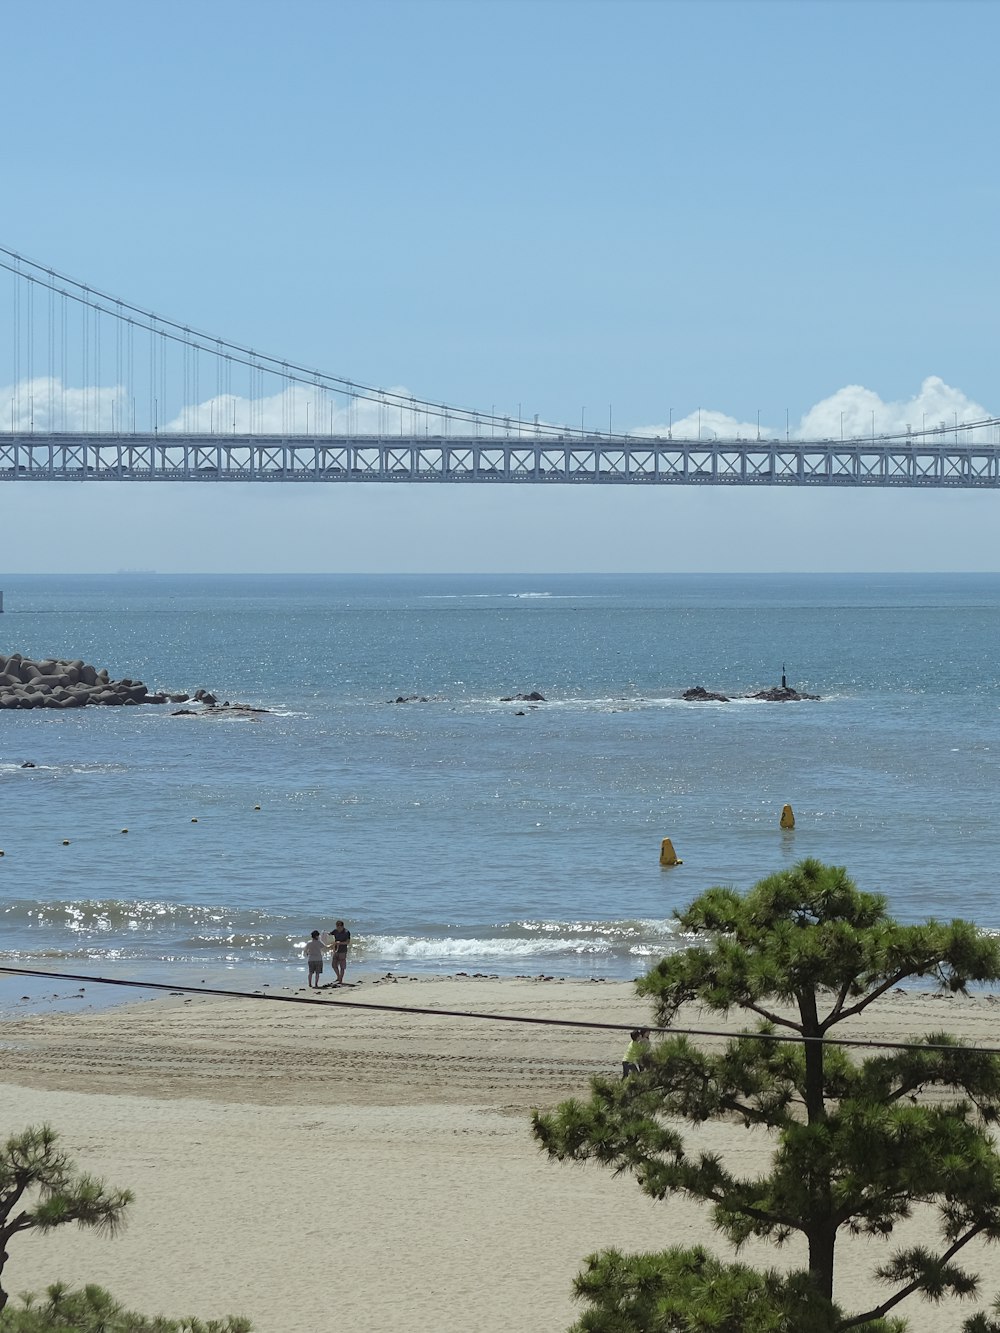 a bridge over a body of water near a beach